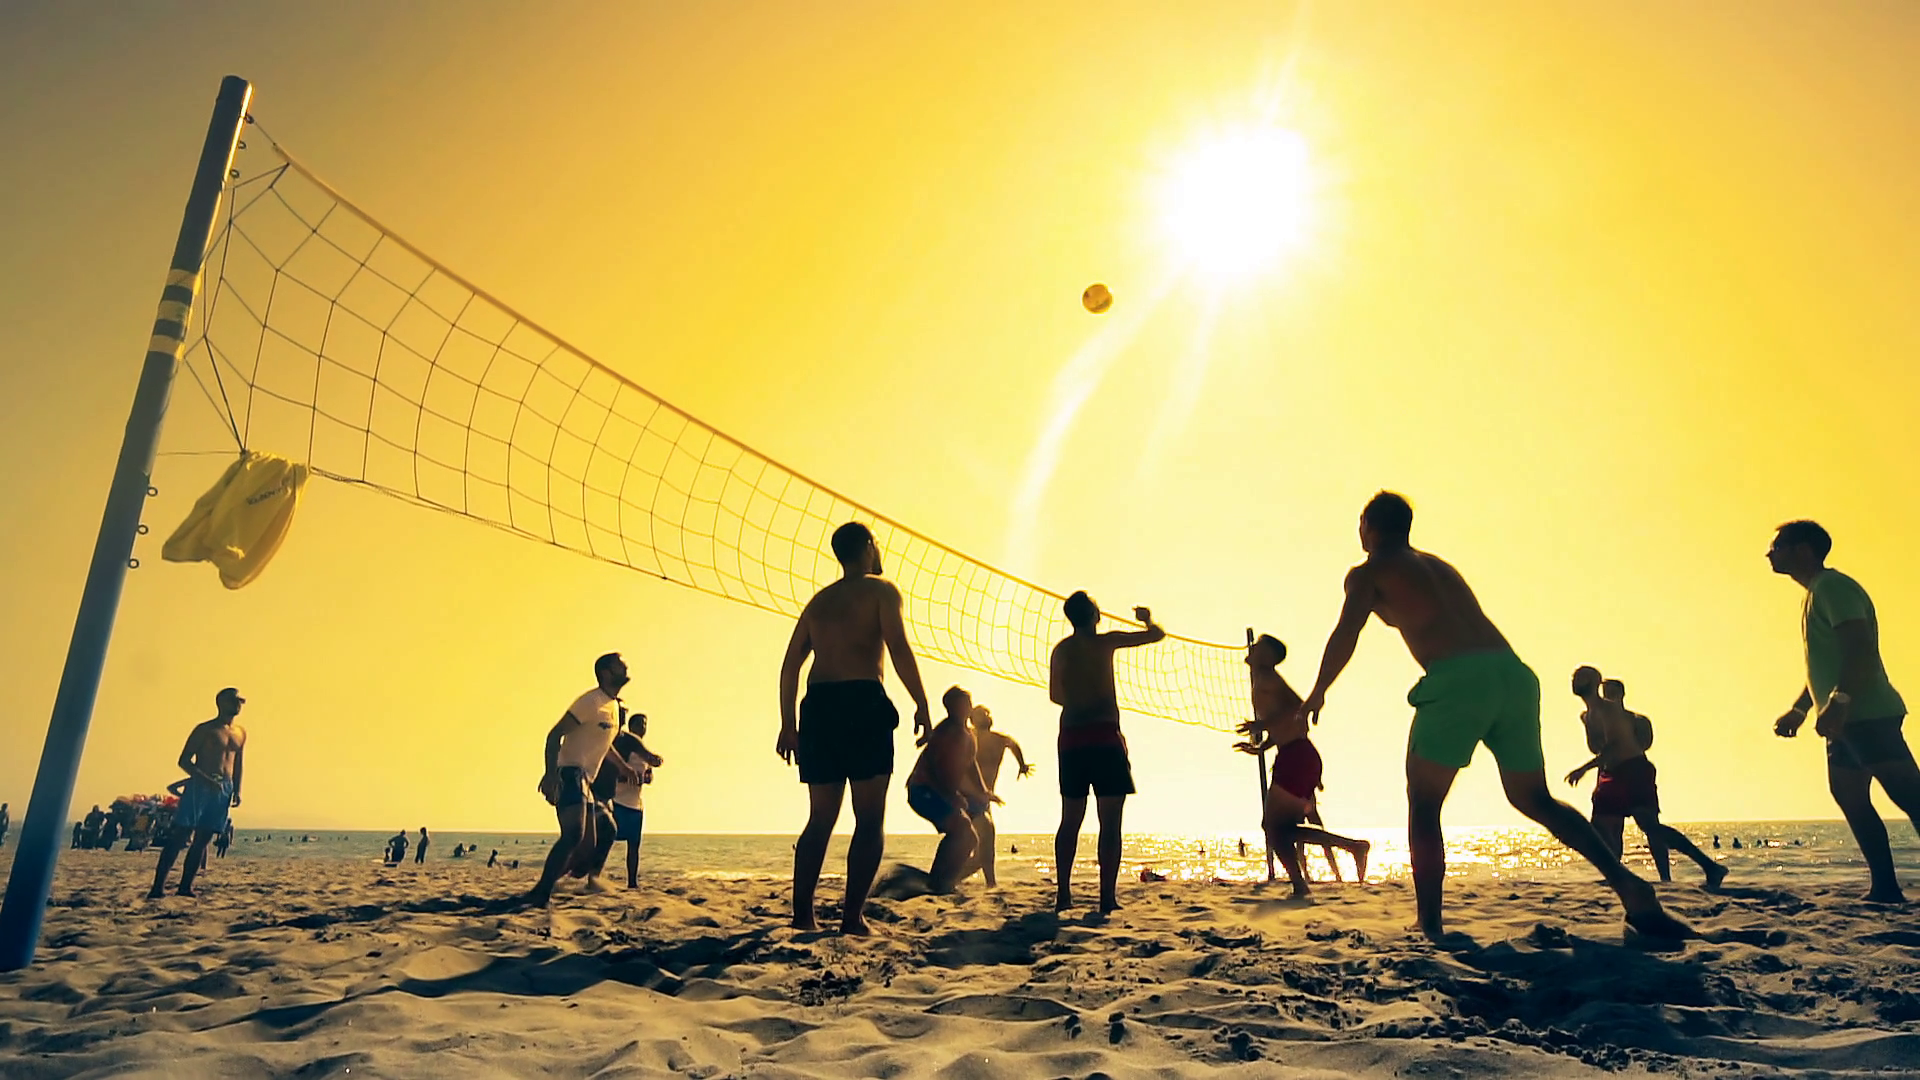 Волейбол на пляже. Пляжный волейбол. Волейбол семья. Пляж волейбол фон. What sports you enjoy doing